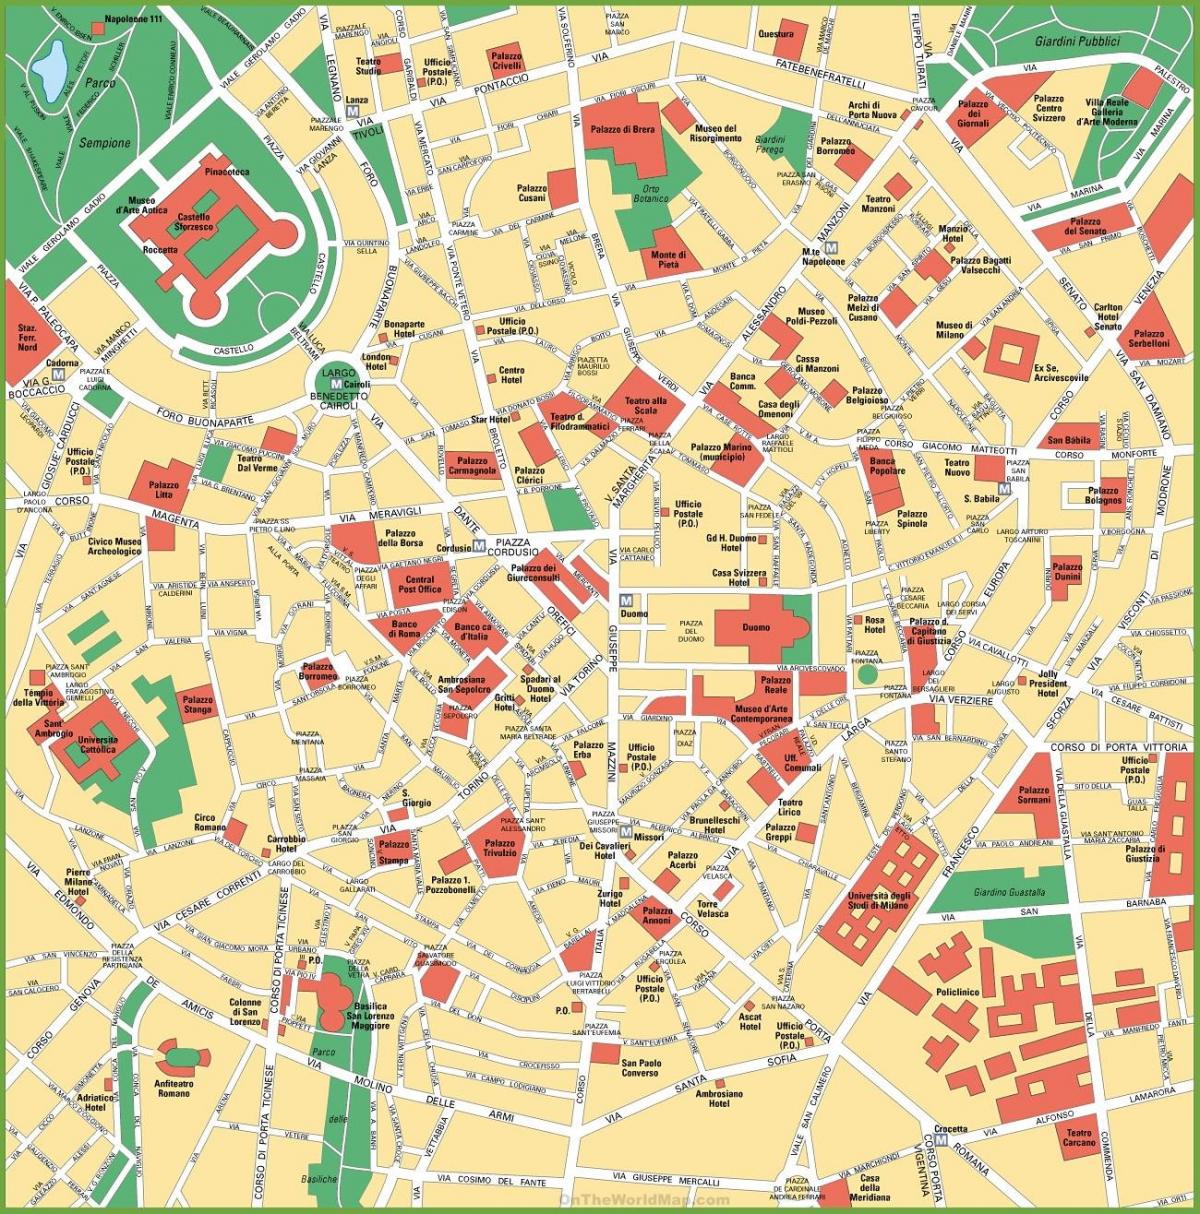 milano city center térkép